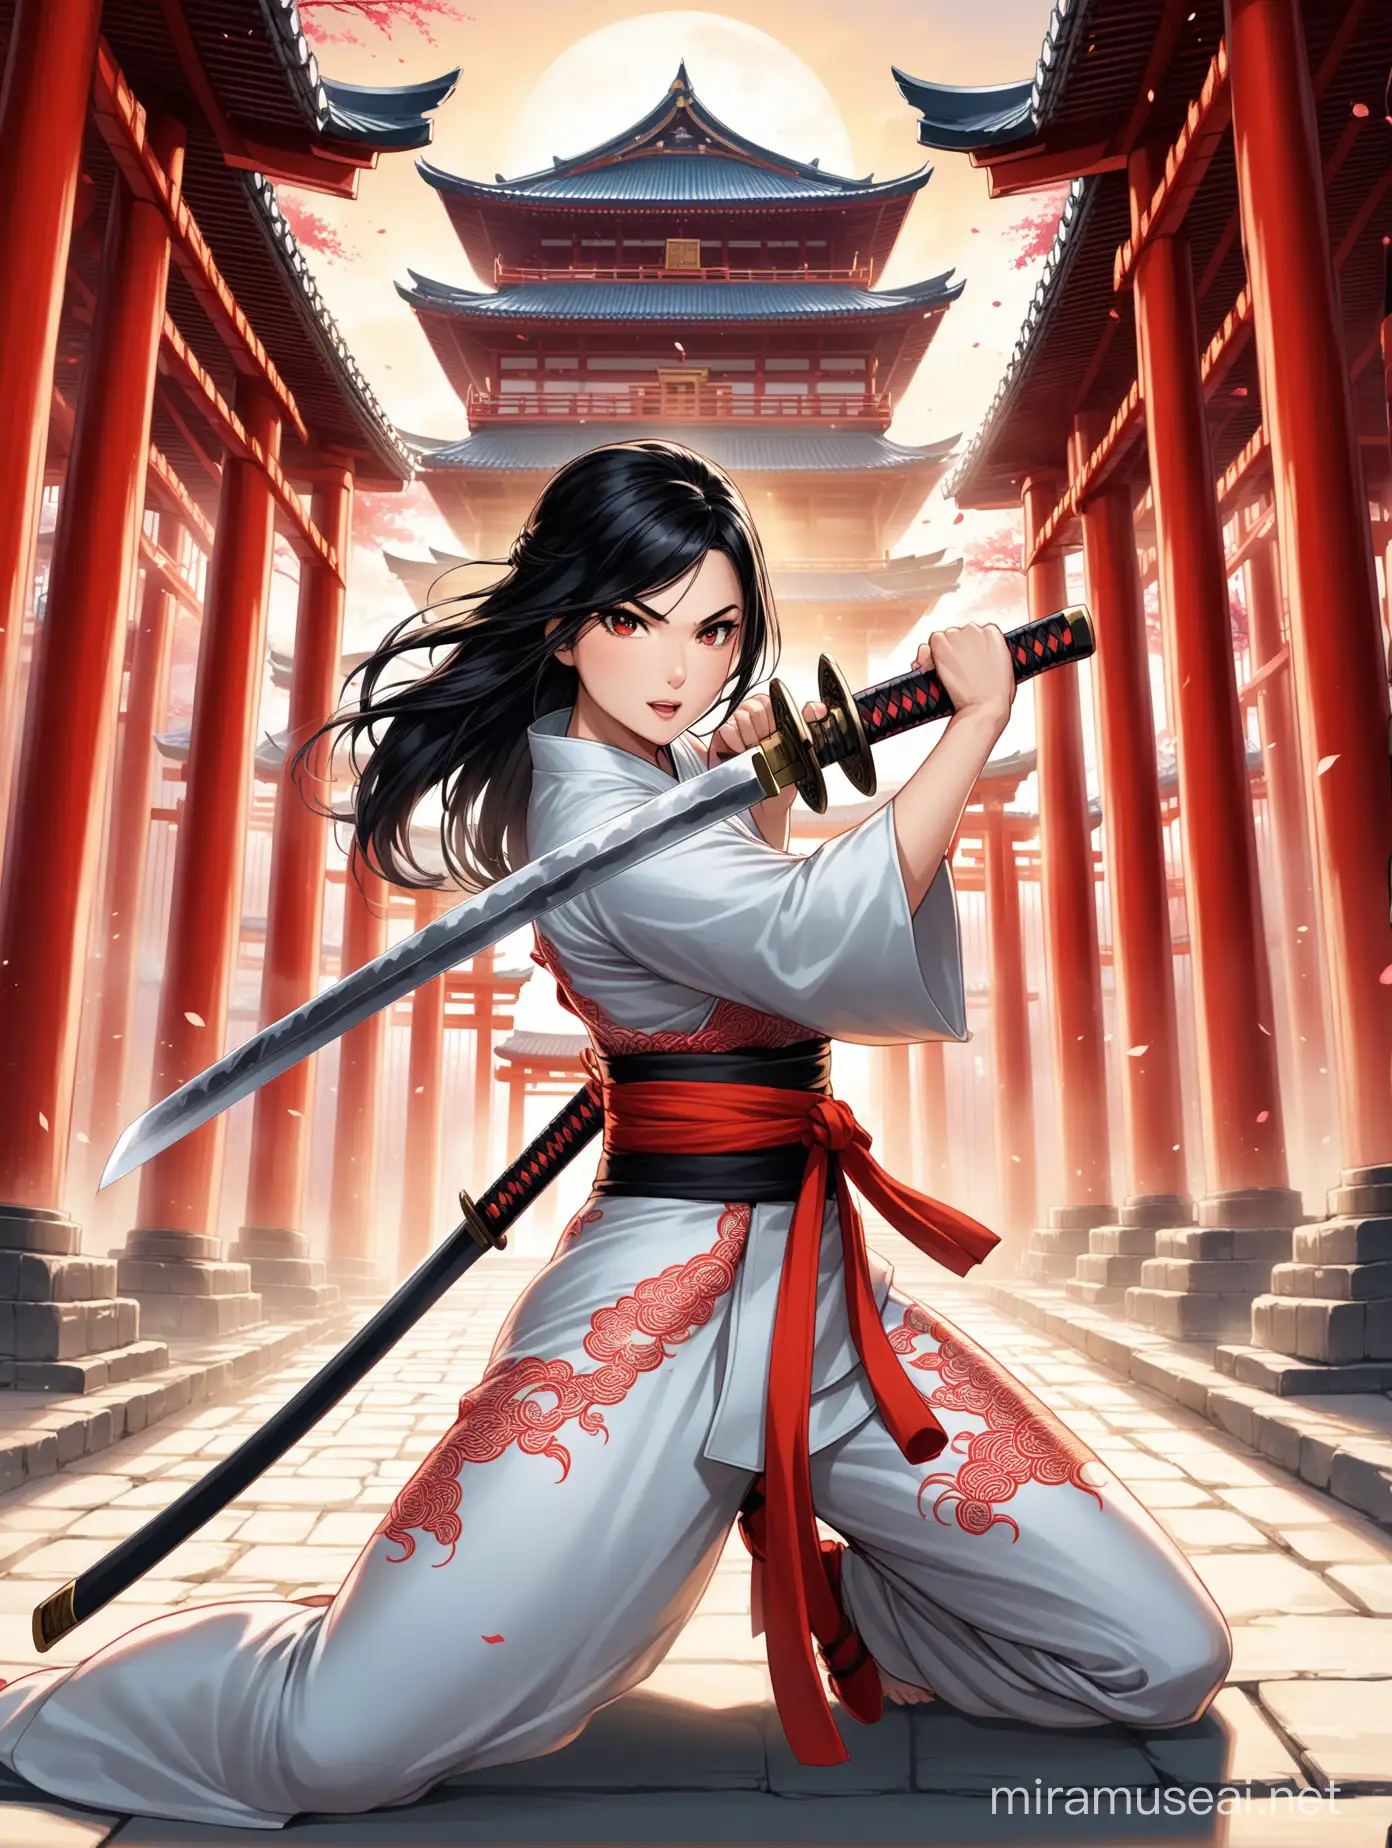 Samurai Girl with Expressive Eyes Wielding Katana at Ancient Temple